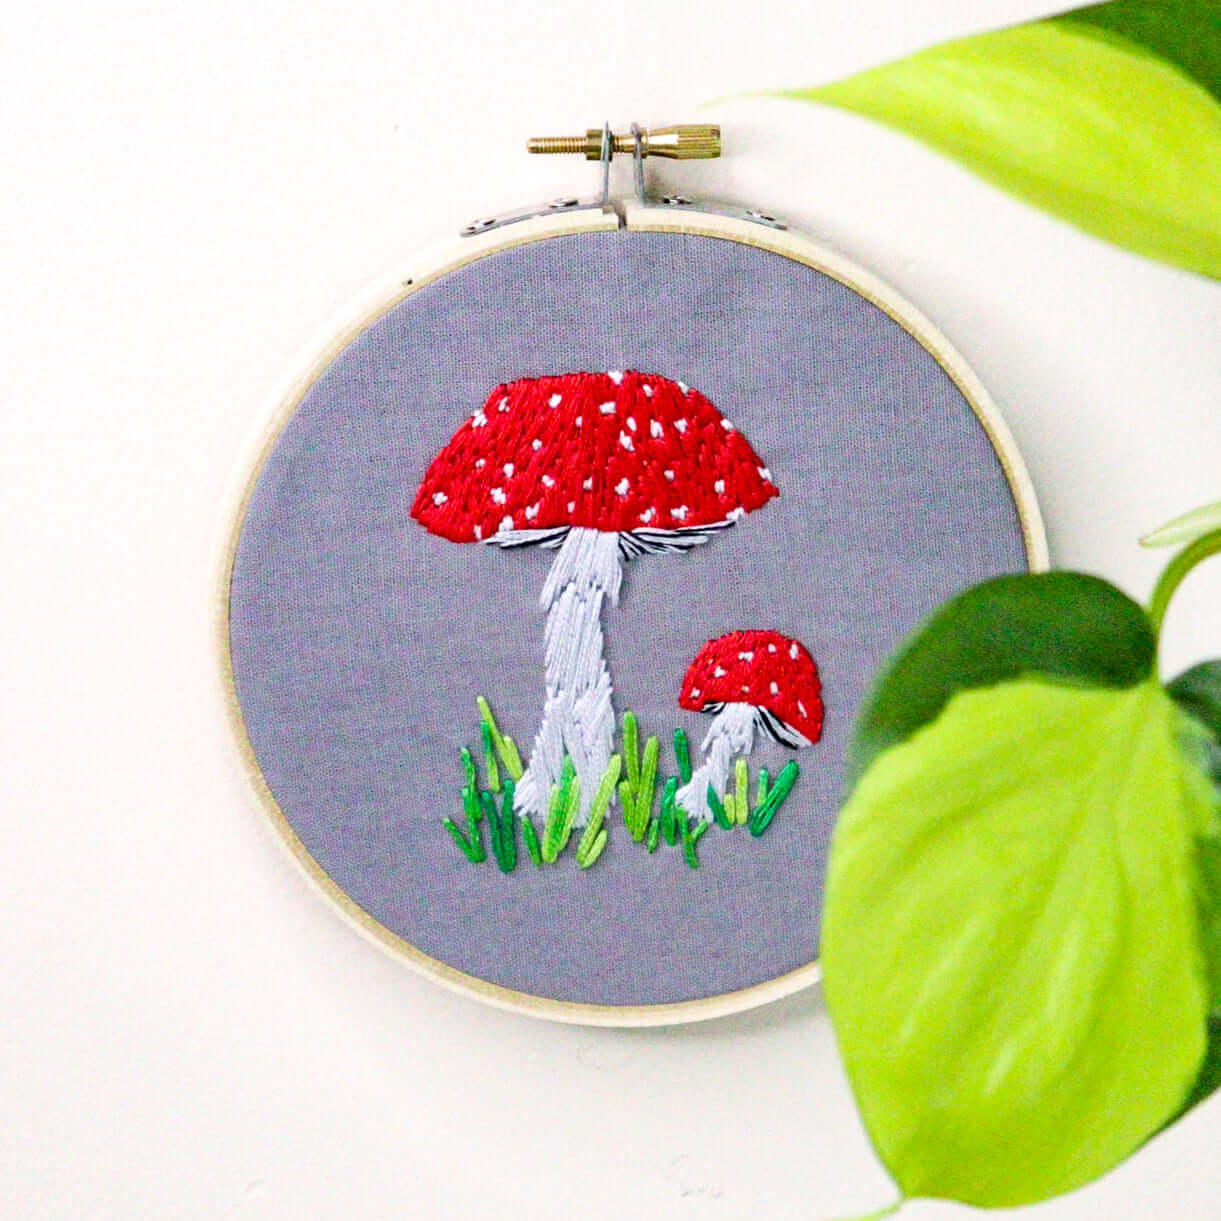 Red Mushroom Modern Embroidery Kit - Craft Make Do